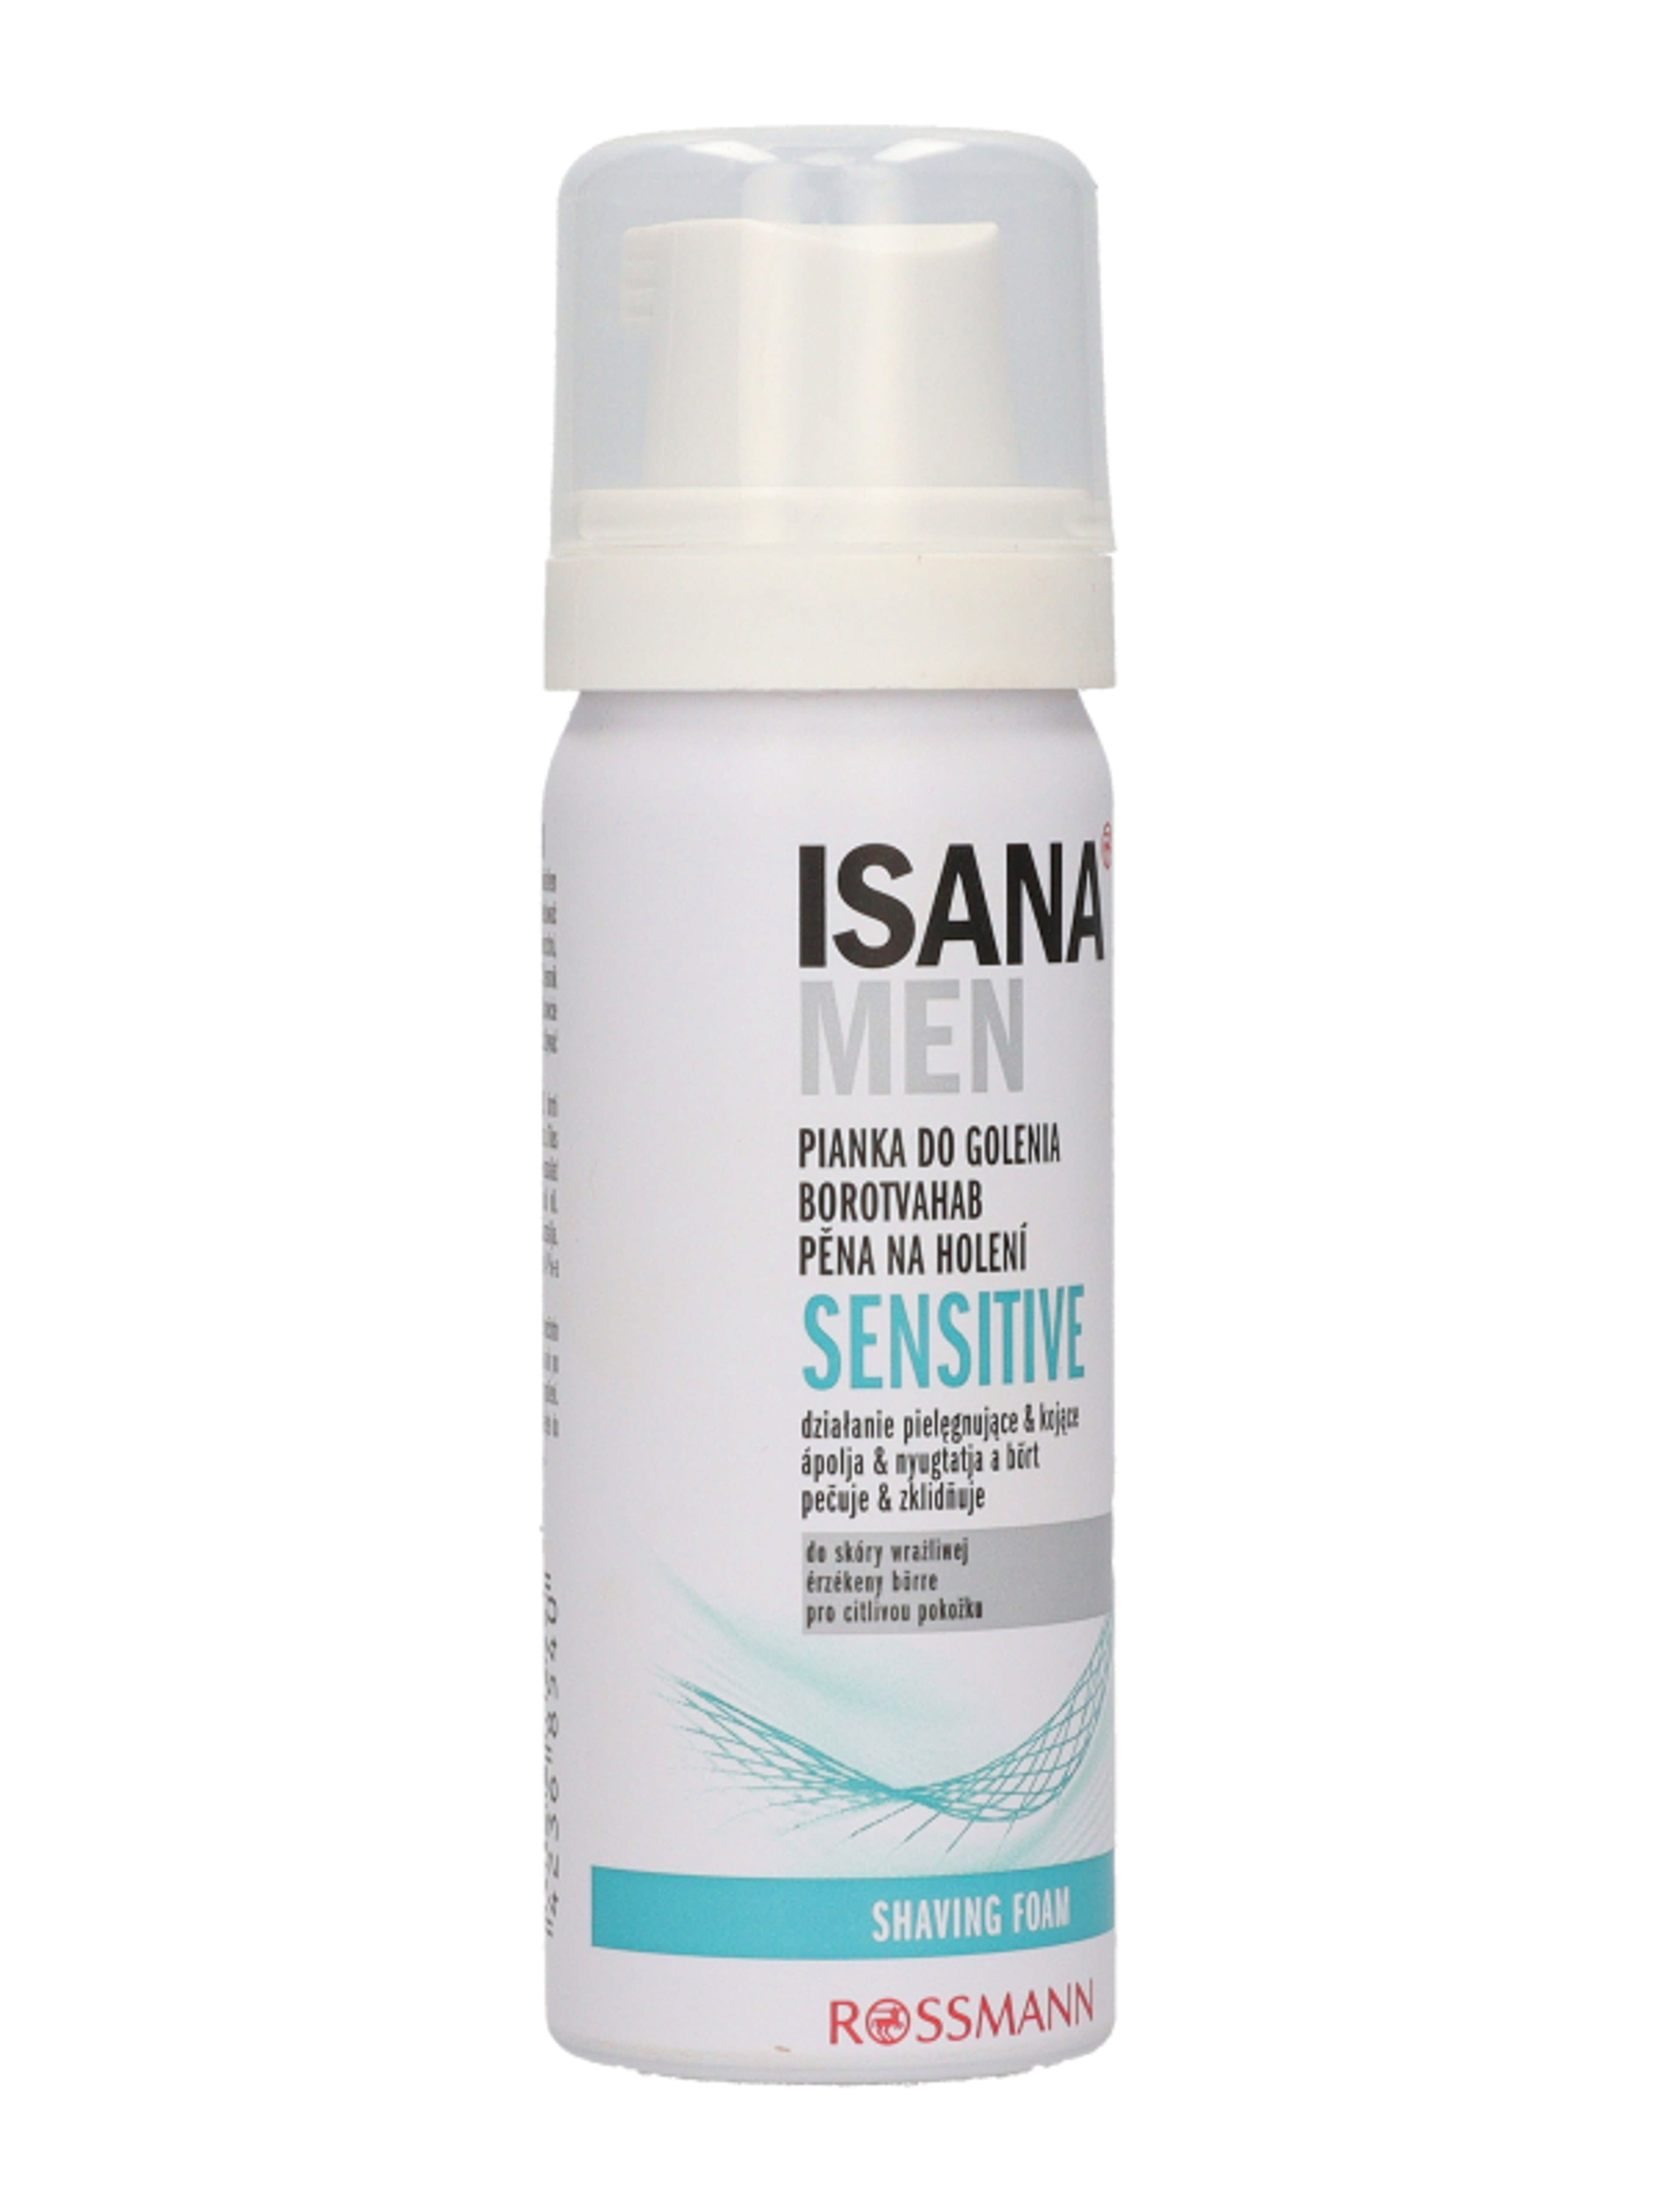 Isana Men Sensitive borotvahab - 50 ml-6